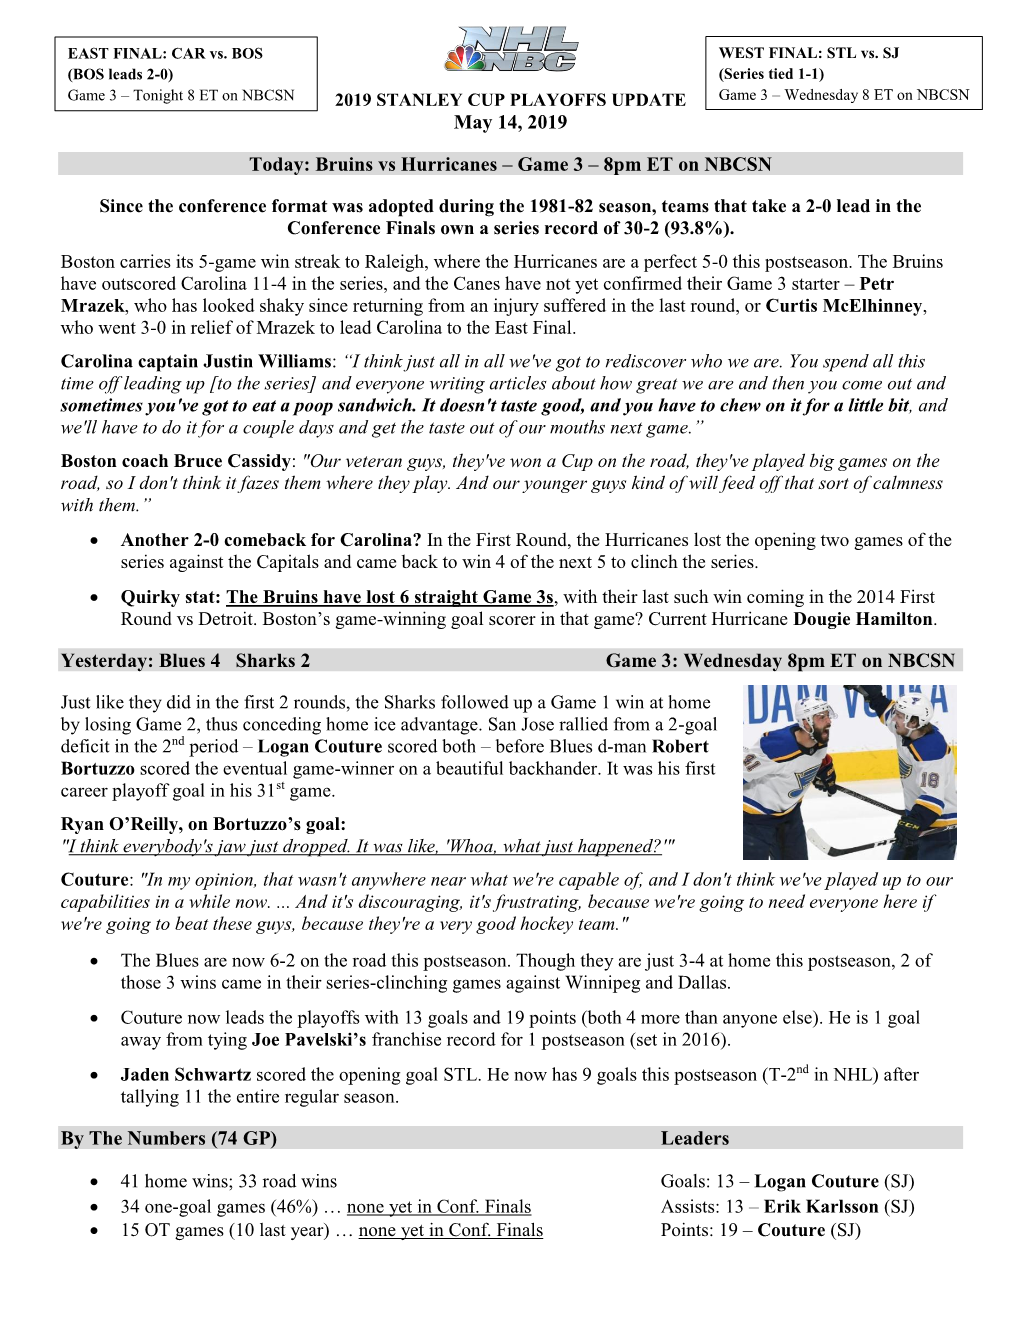 Bruins Vs Hurricanes – Game 3 – 8Pm ET on NBCSN